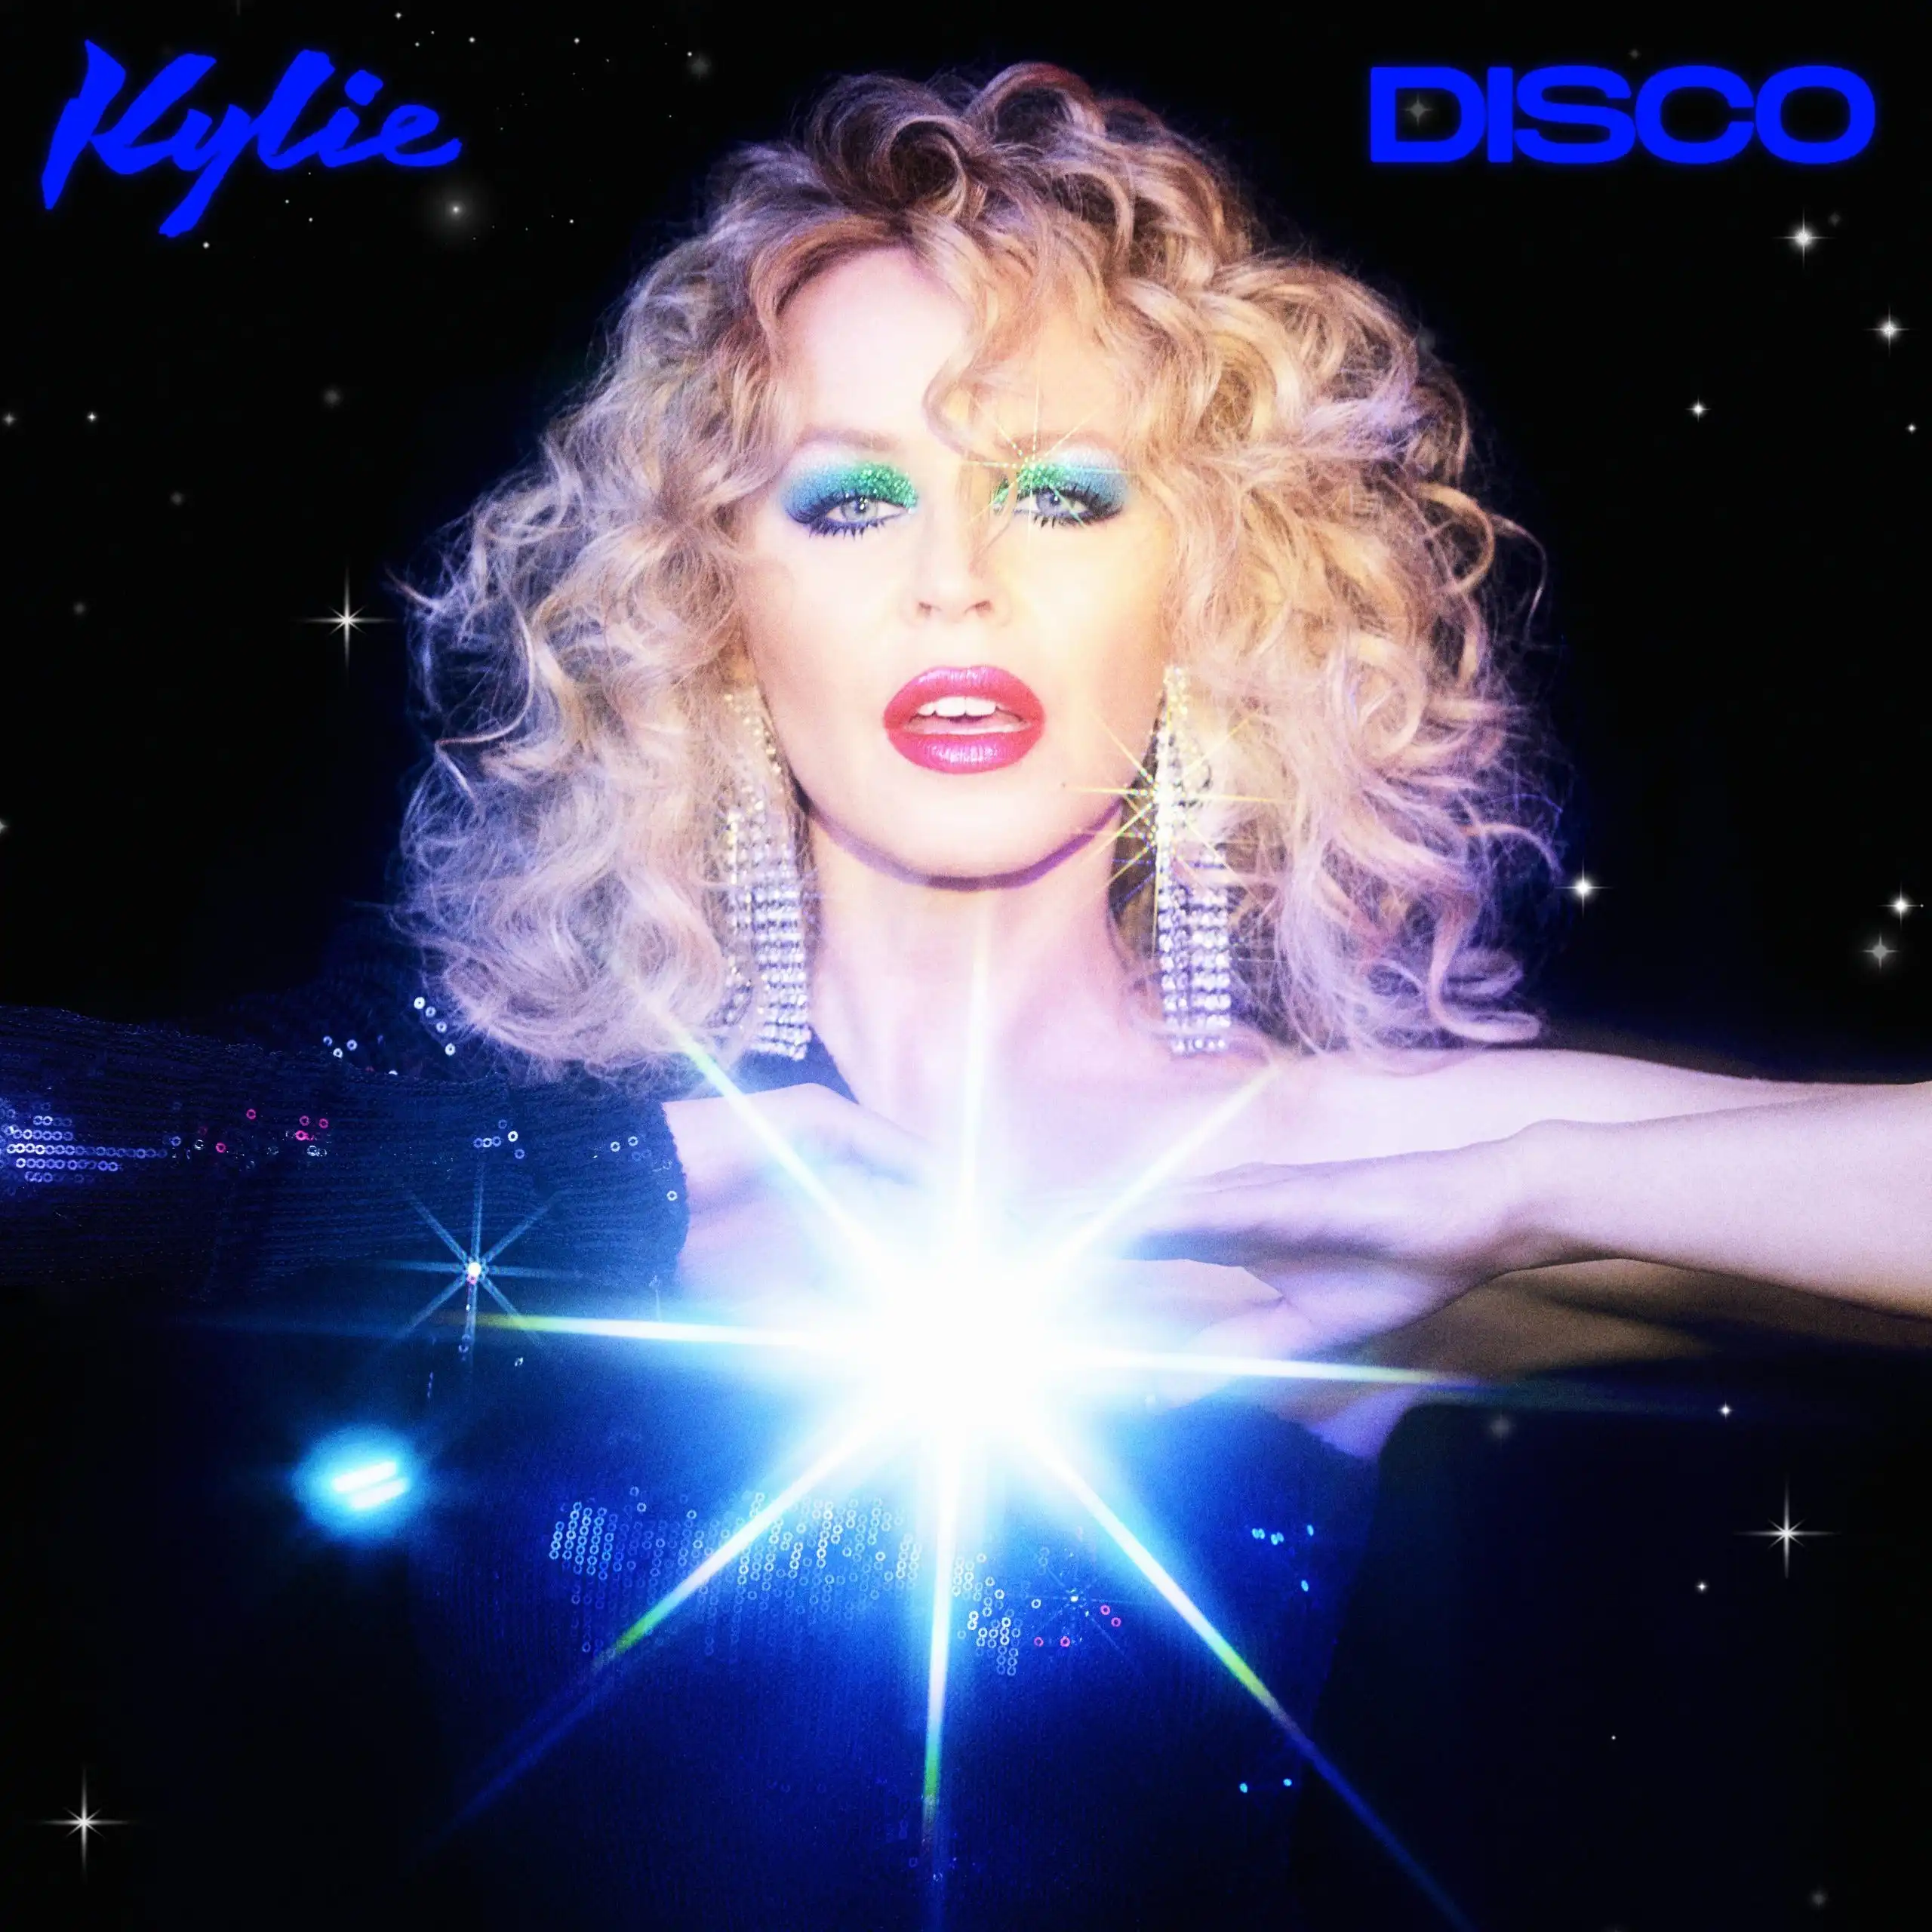 Kylie Disco - Black Vinyl Album